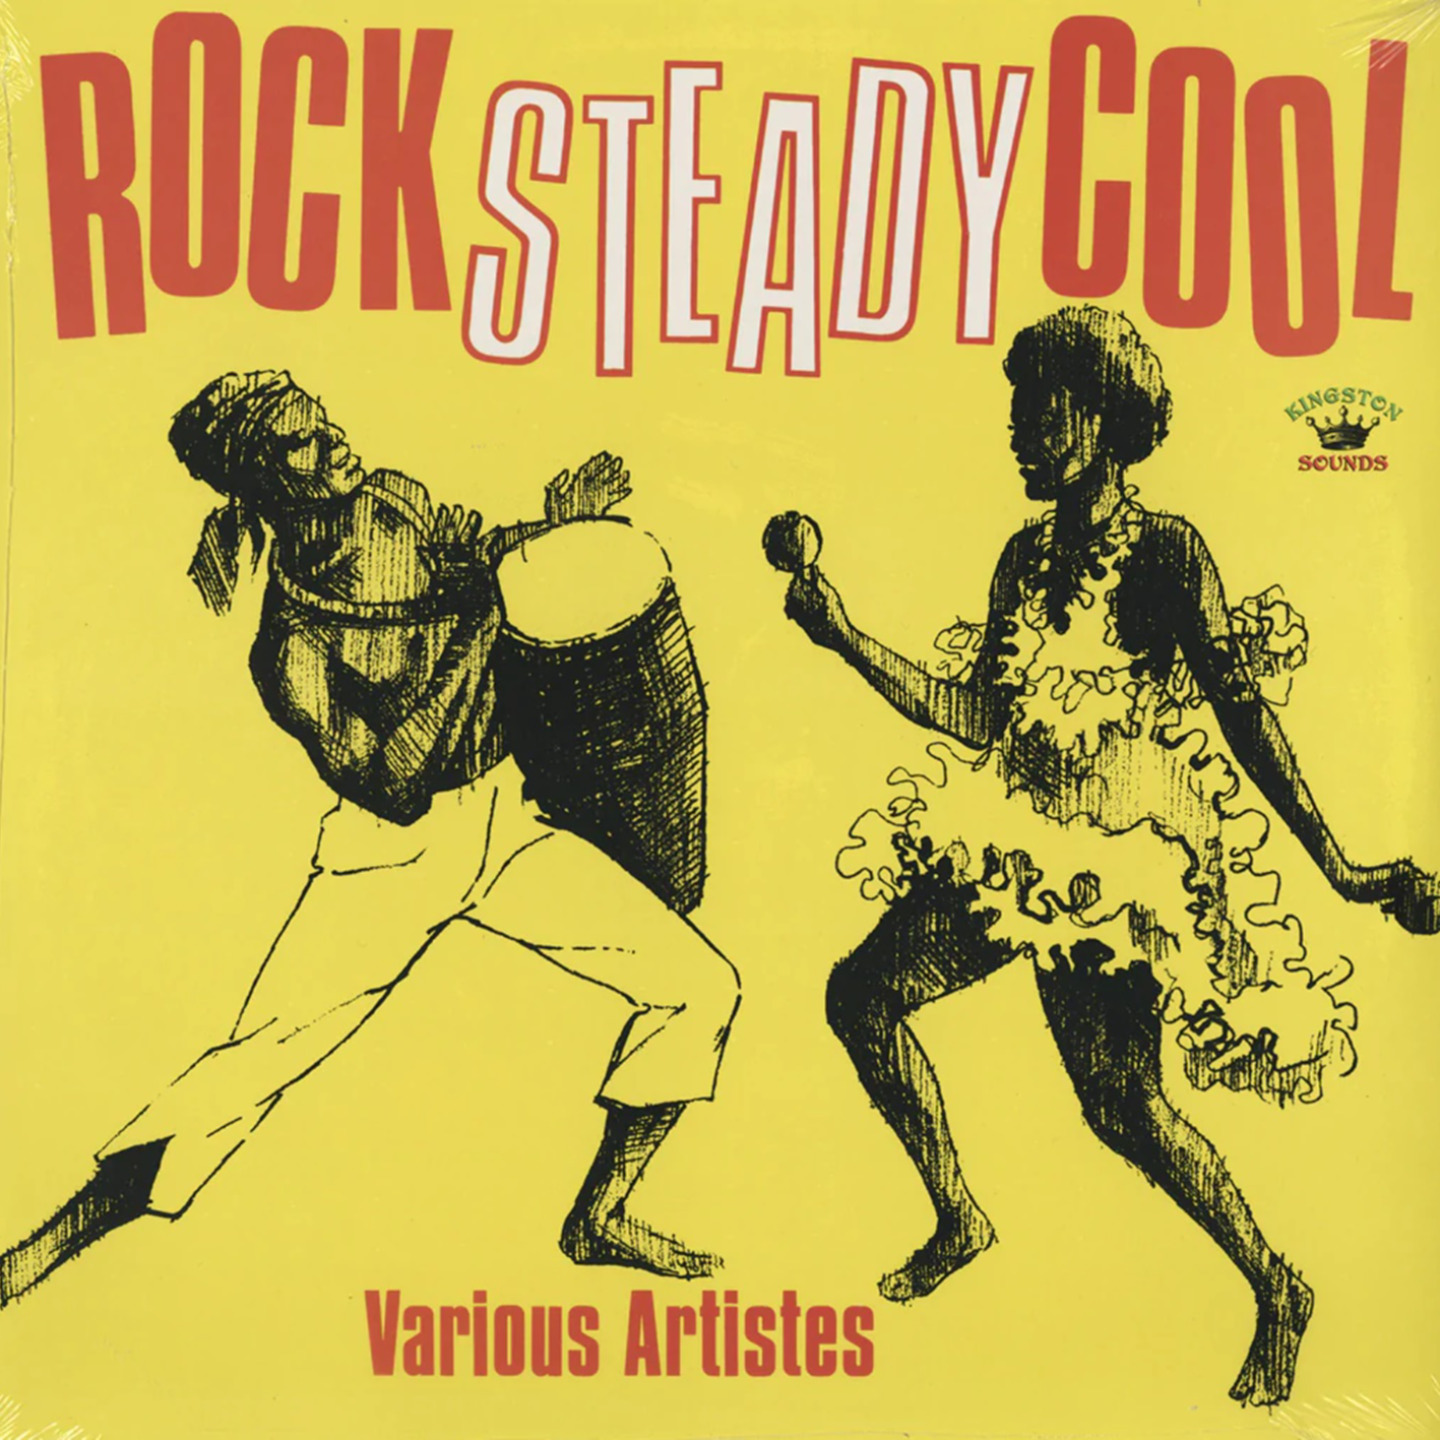 V/A - Rock Steady Cool LP